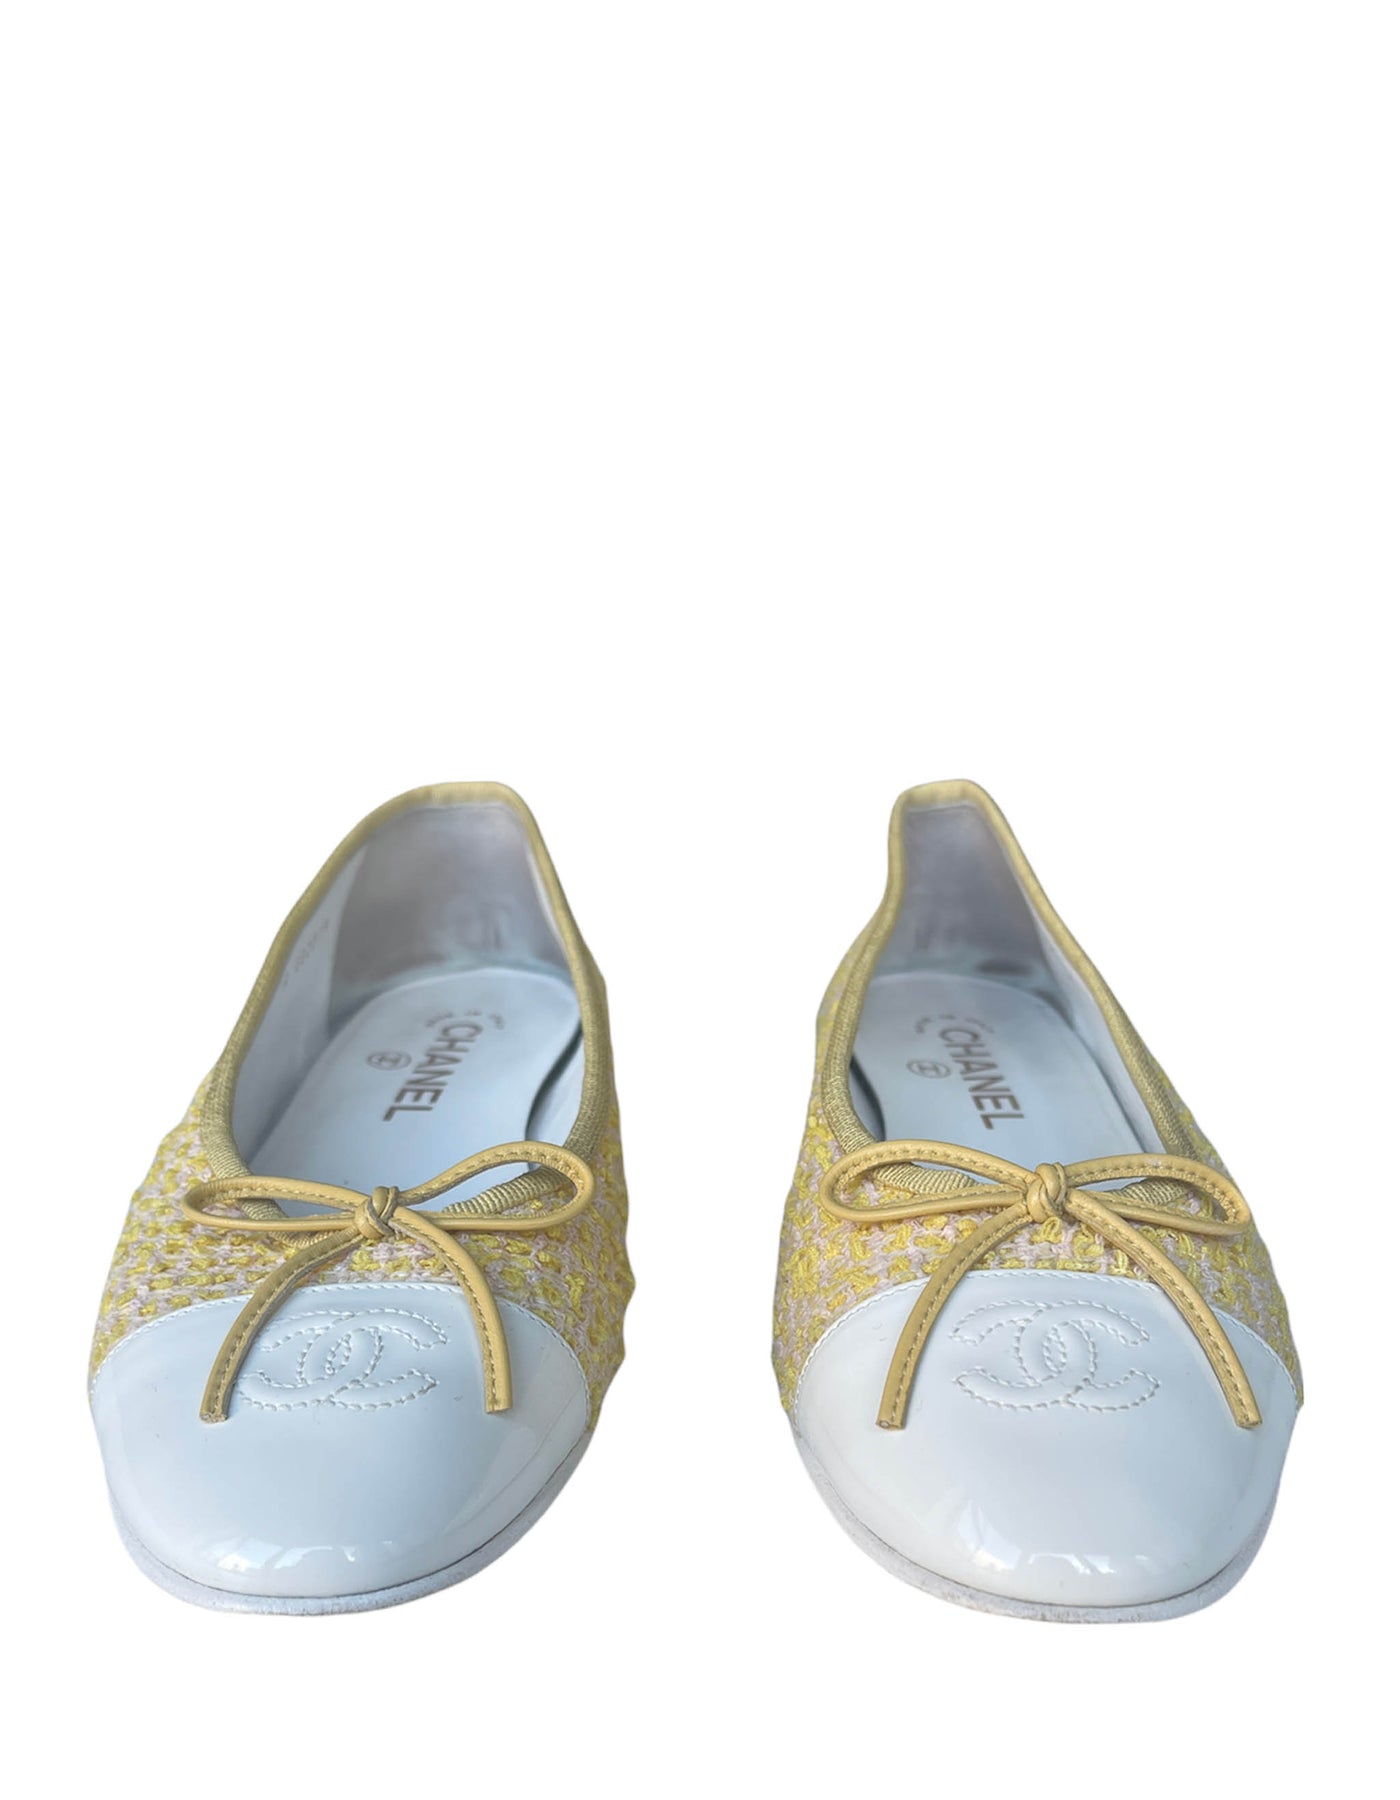 Chanel 2021 Yellow Tweed/ White Patent CC Ballerina Flats sz 39